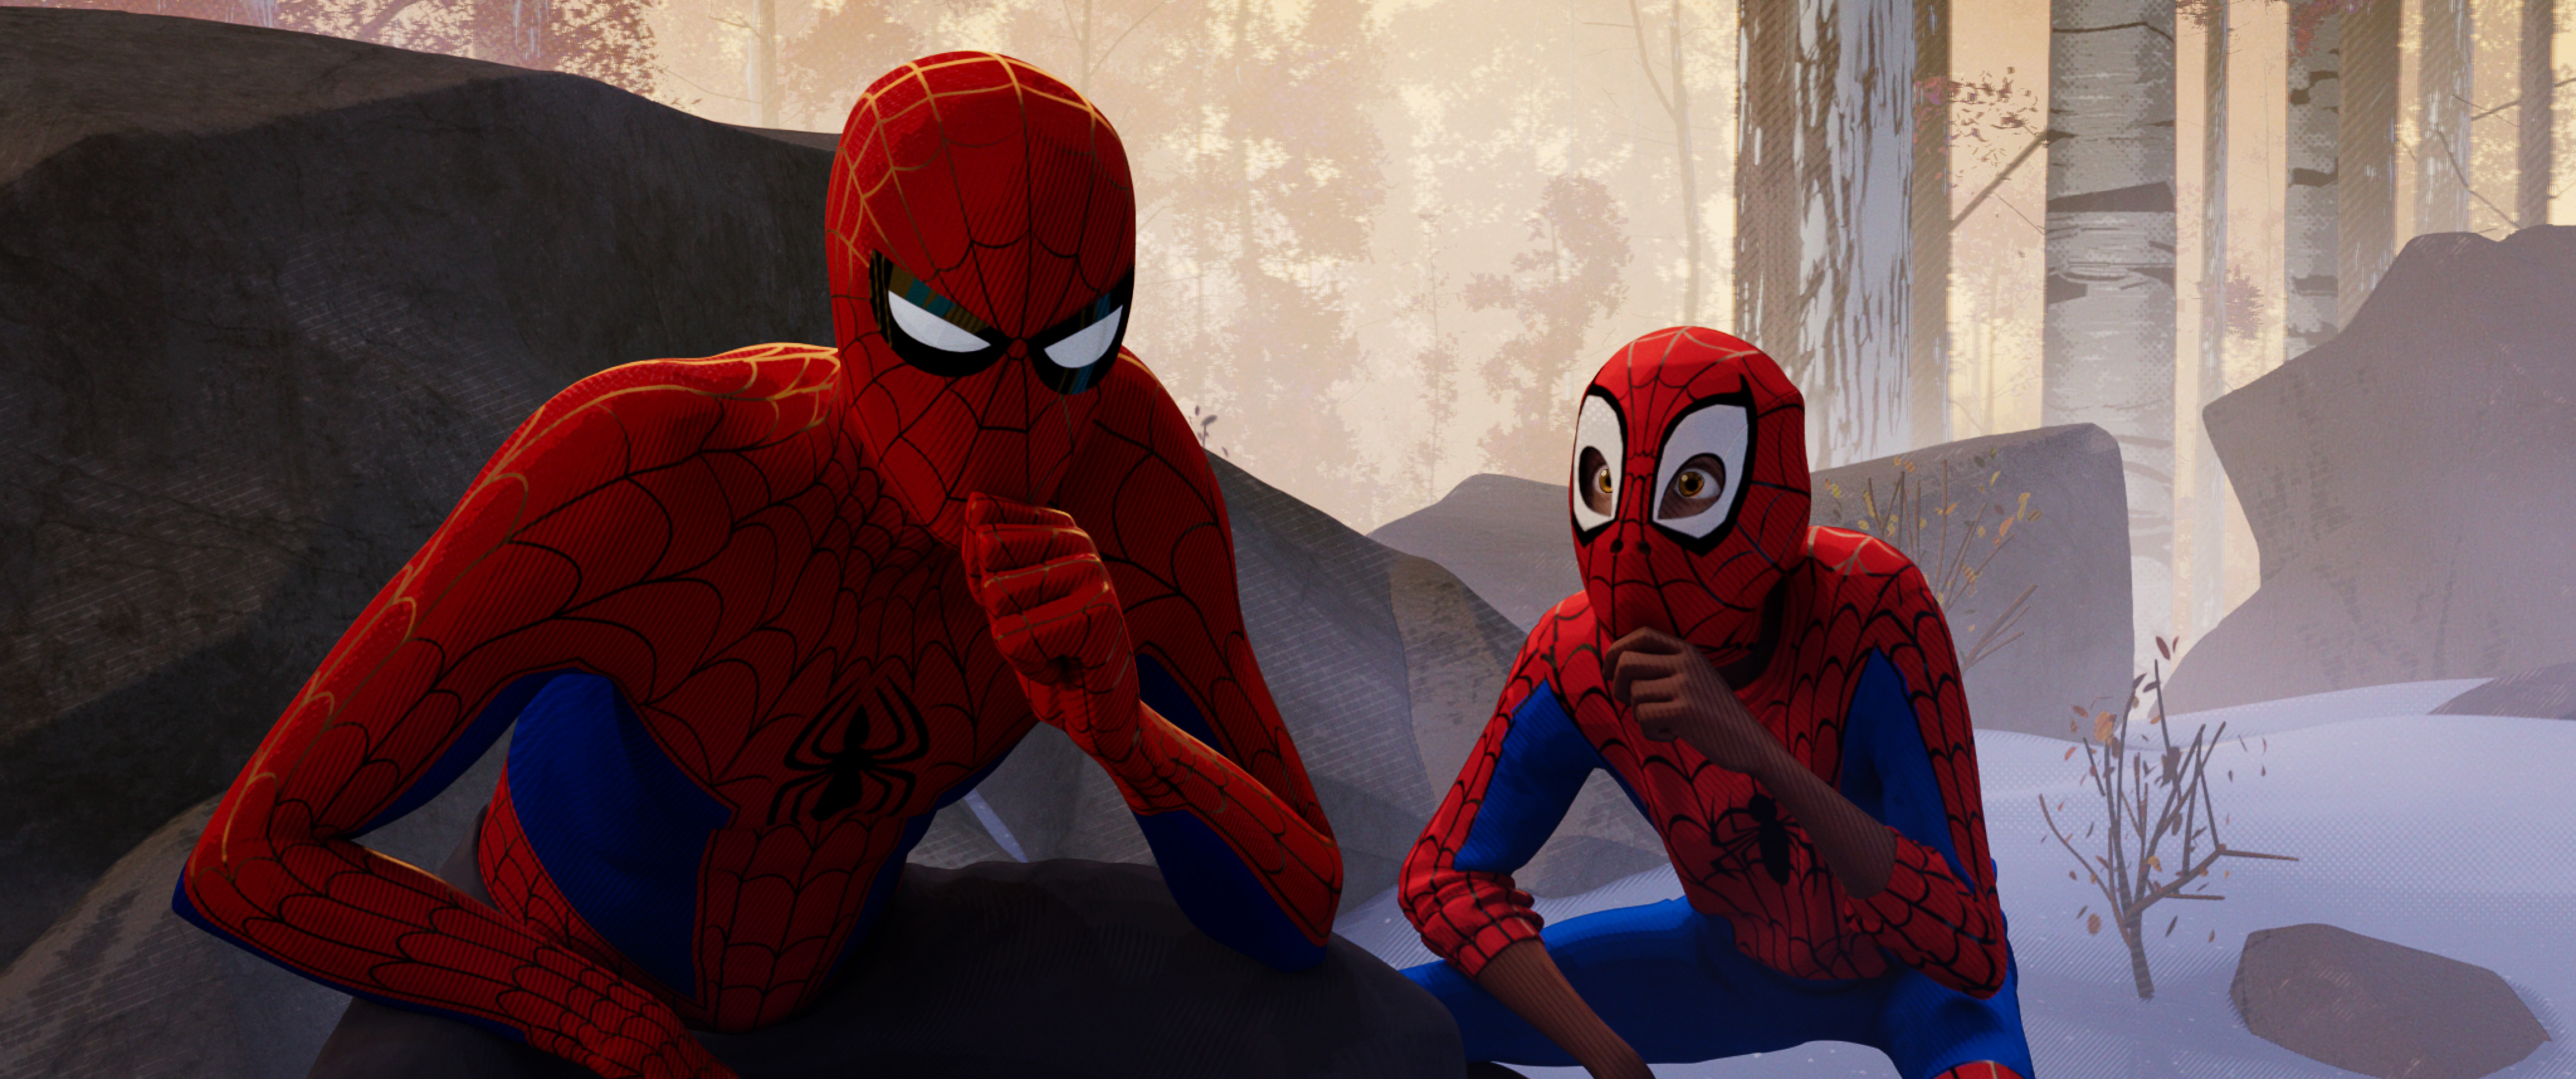 Spider-Man™: Into the Spider-Verse Gallery 10